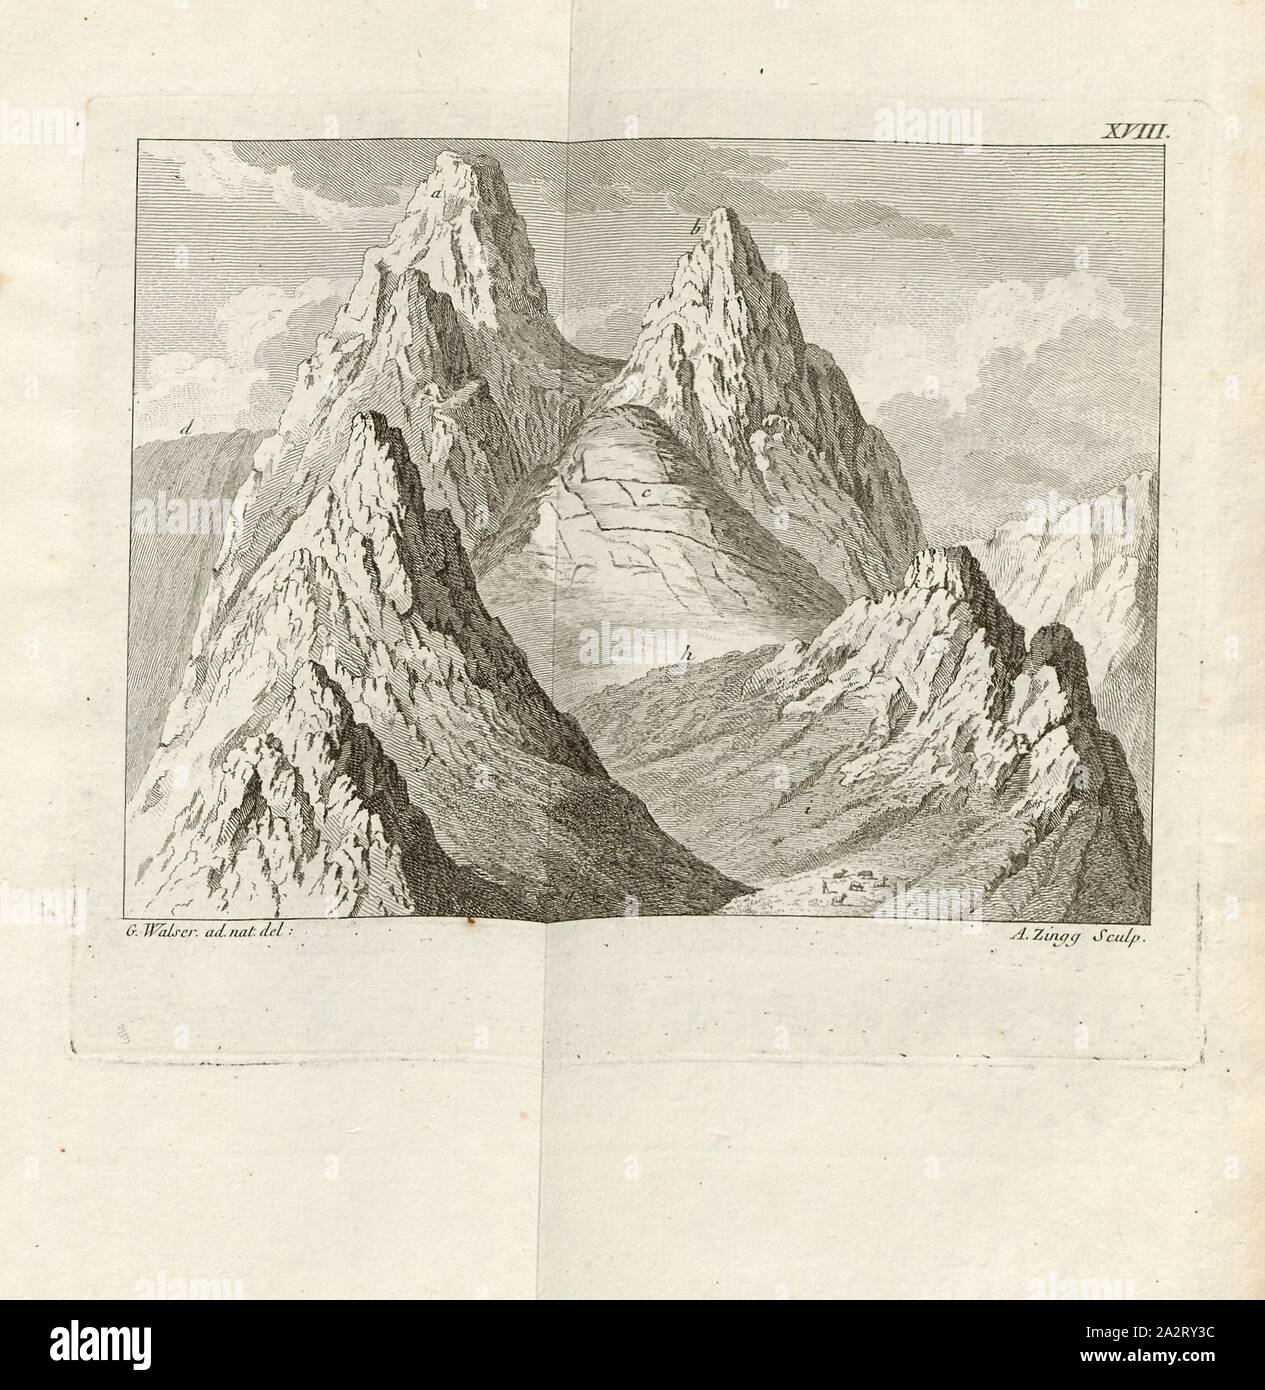 La tomaia Saentis cluster nel cantone di Abbentsel, vista del Säntis in Appenzell, firmato: G. Walser (ad nat. Del.); A. Zingg (sculp.), Fig. 20, XVIII, dopo p. 372, p. 414, Walser, Gabriel (annuncio nat. canc.); Zingg, Adrian (sculp.), 1770, Gottlieb Sigmund Gruner; Louis-Félix Guinement de Keralio: Histoire Naturelle des glacieres de Suisse. Parigi: Panckoucke, MDCCLXX [1770 Foto Stock